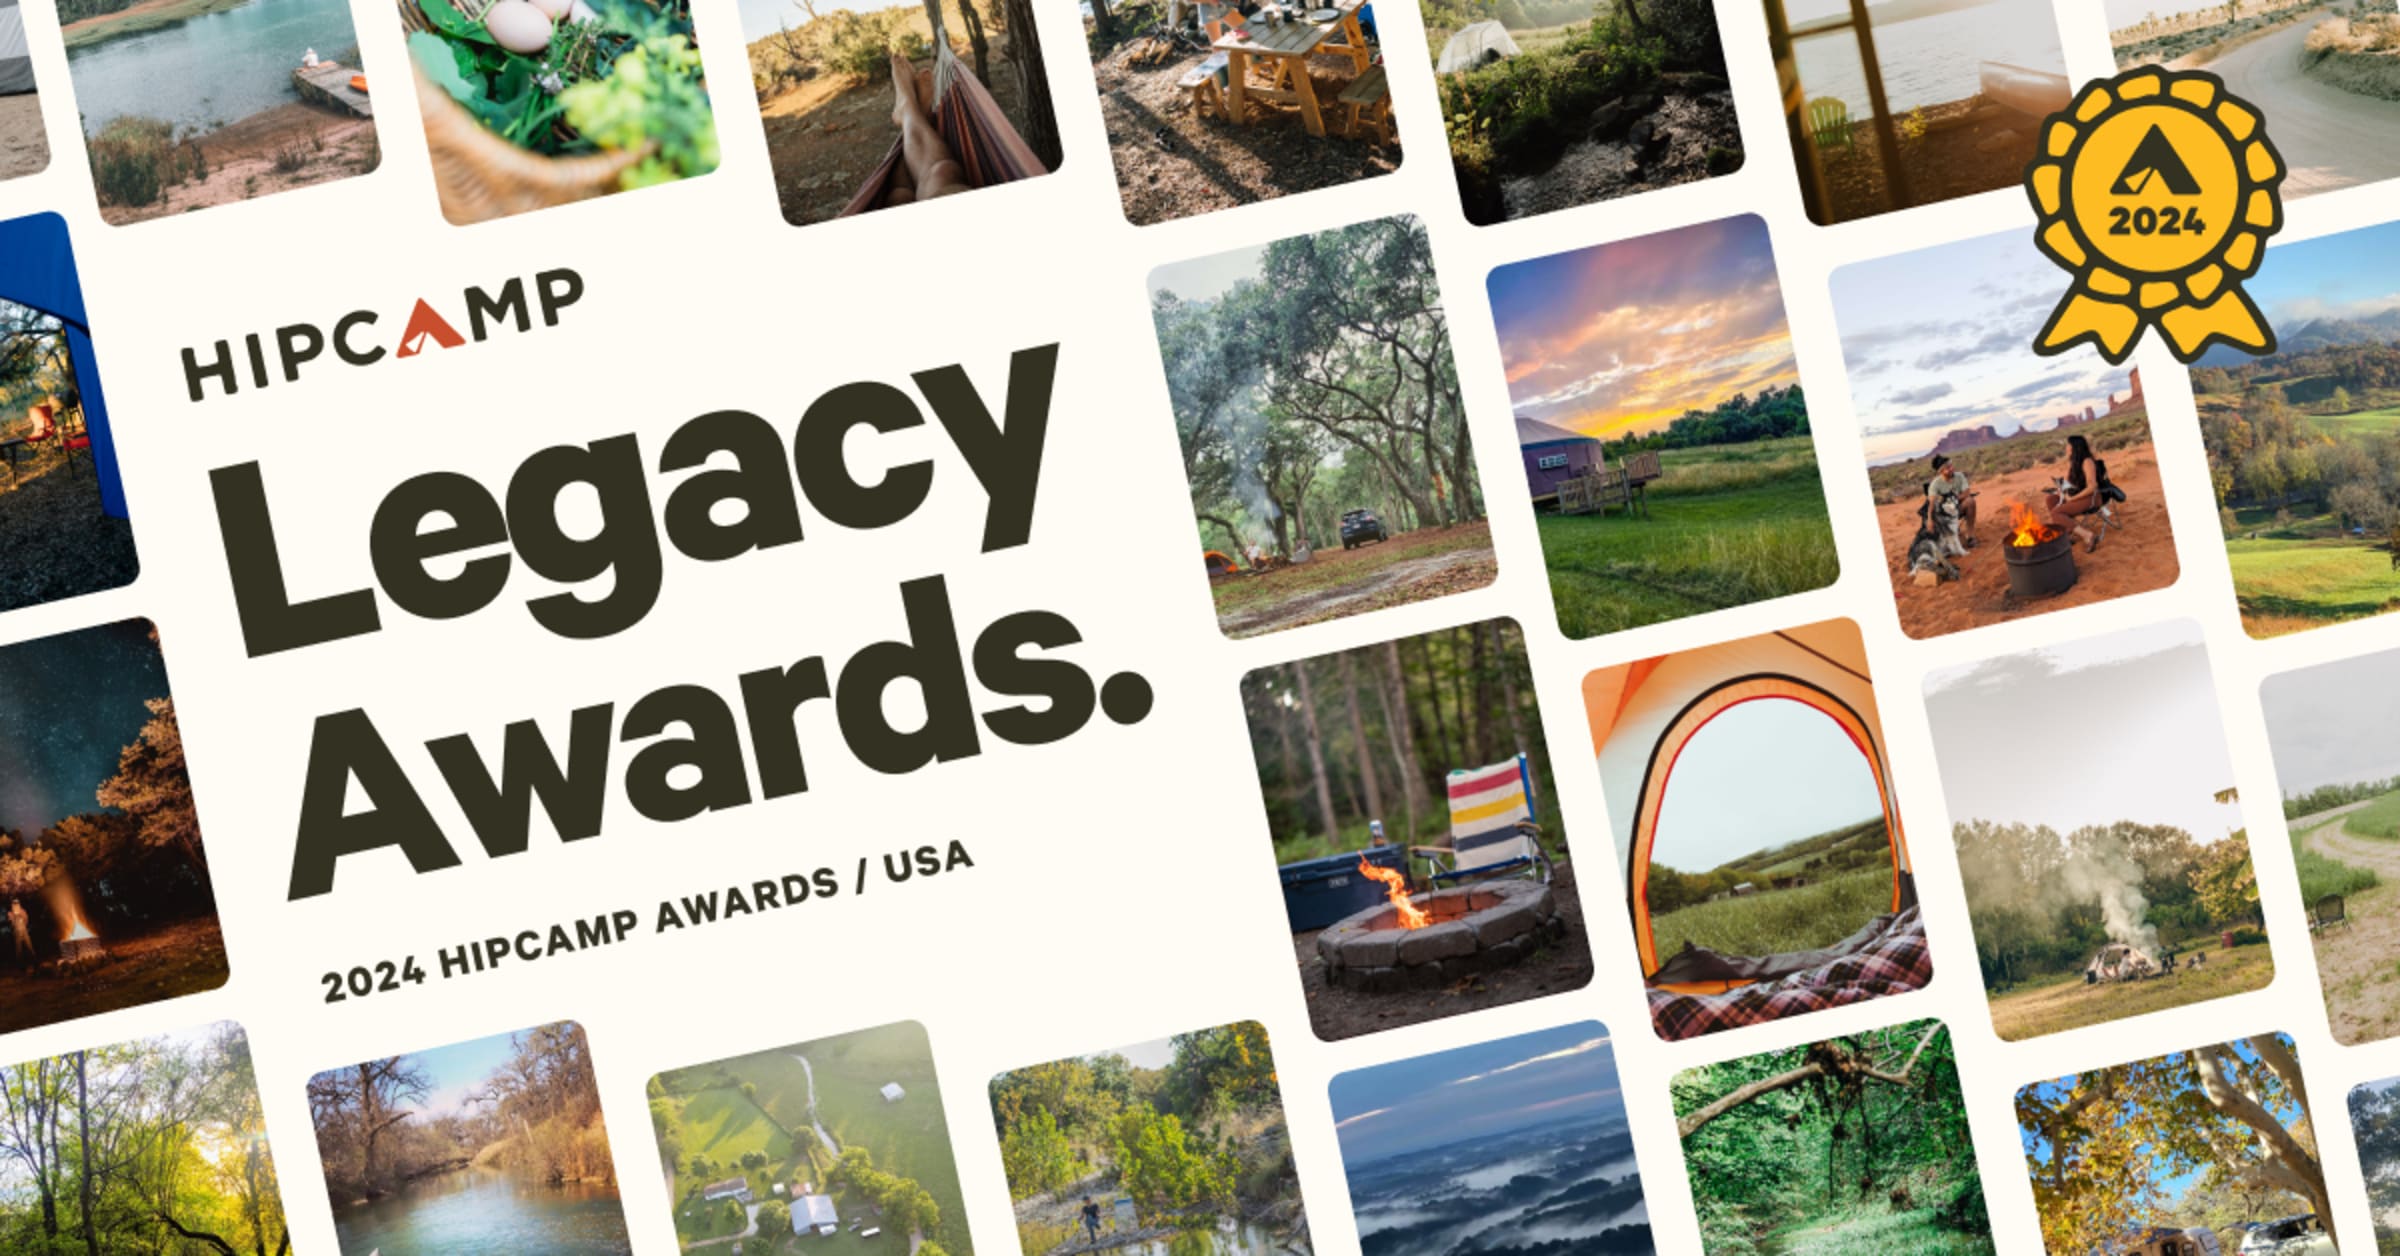 Hipcamp Legacy Awards 2024: US Edition